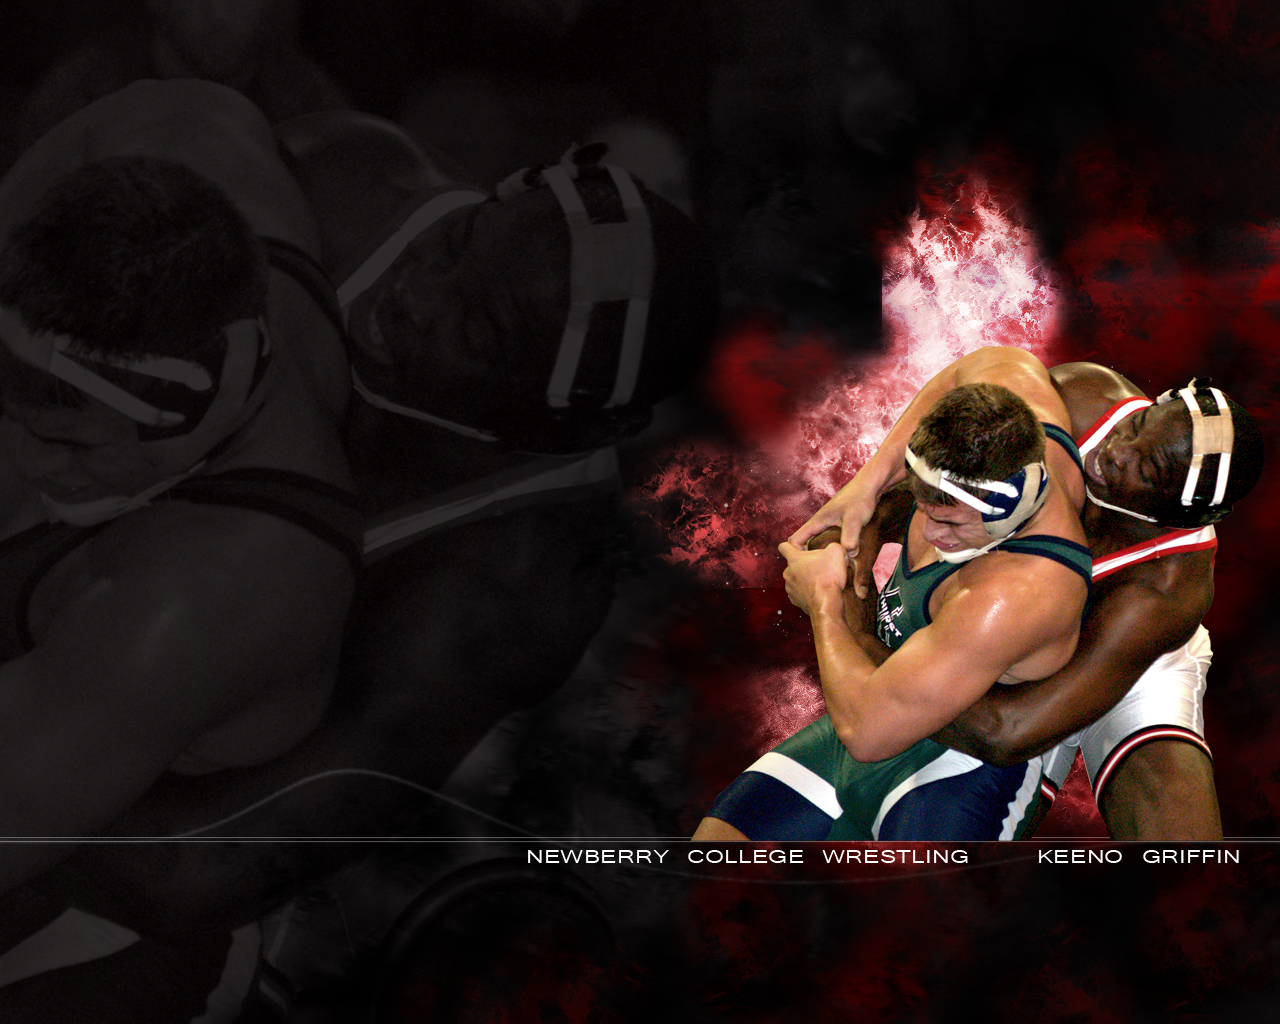 Newberry College Wrestling Desktop Wallpaper Featuring Keeno